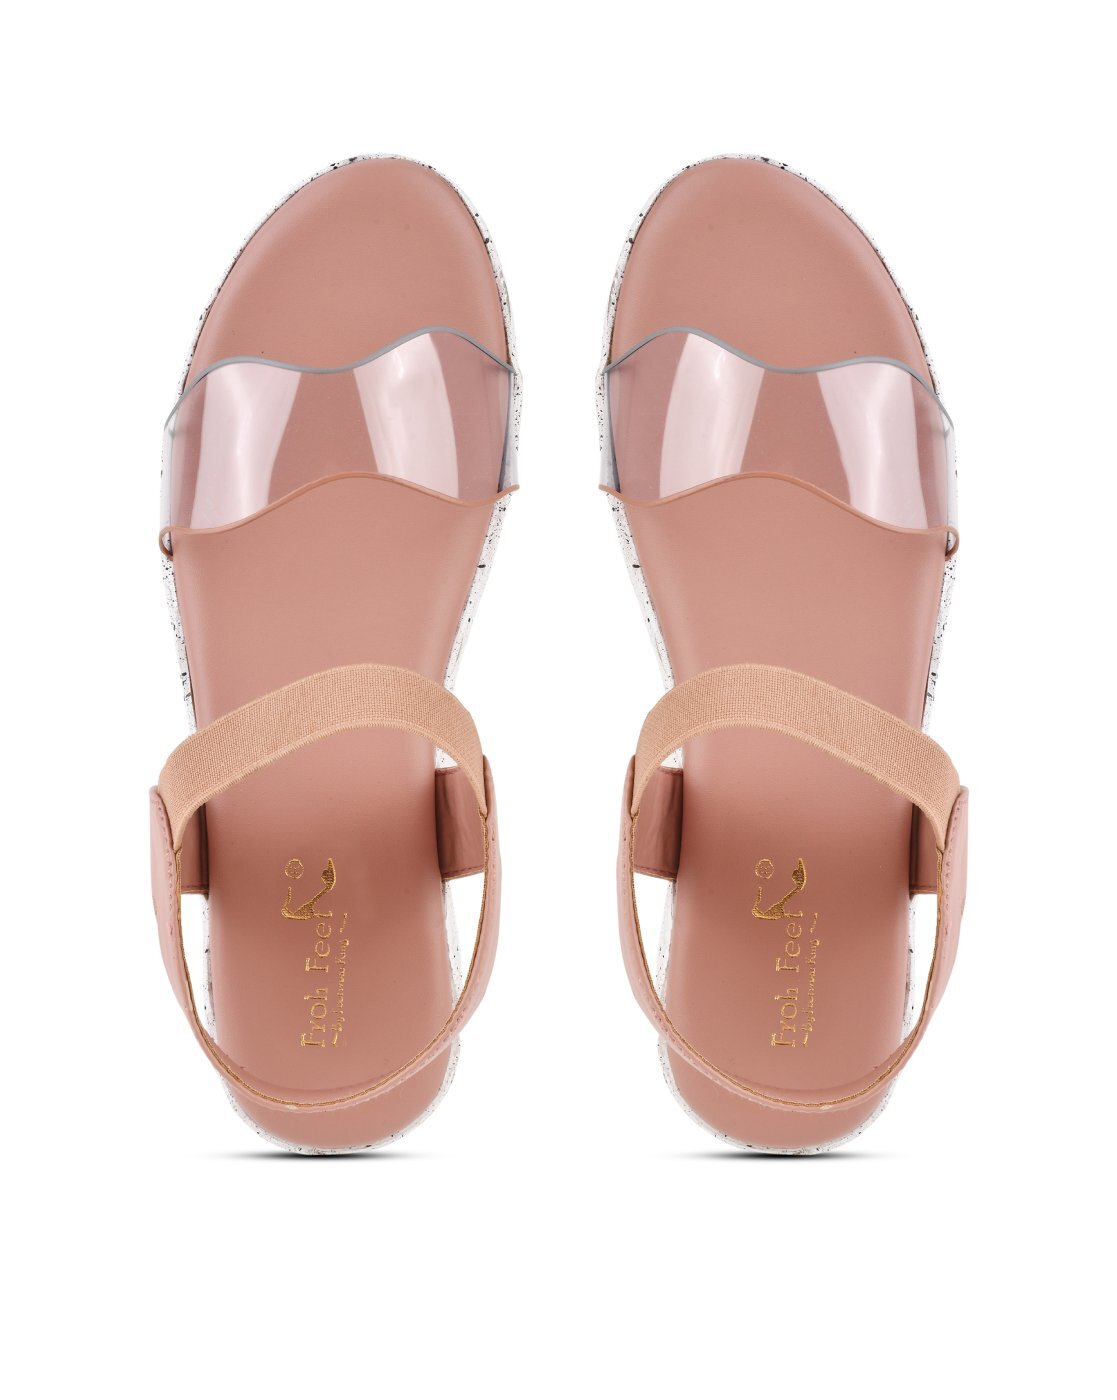 FROH FEET Peach Women's Fashion Sandals Light Weight, Comfortable